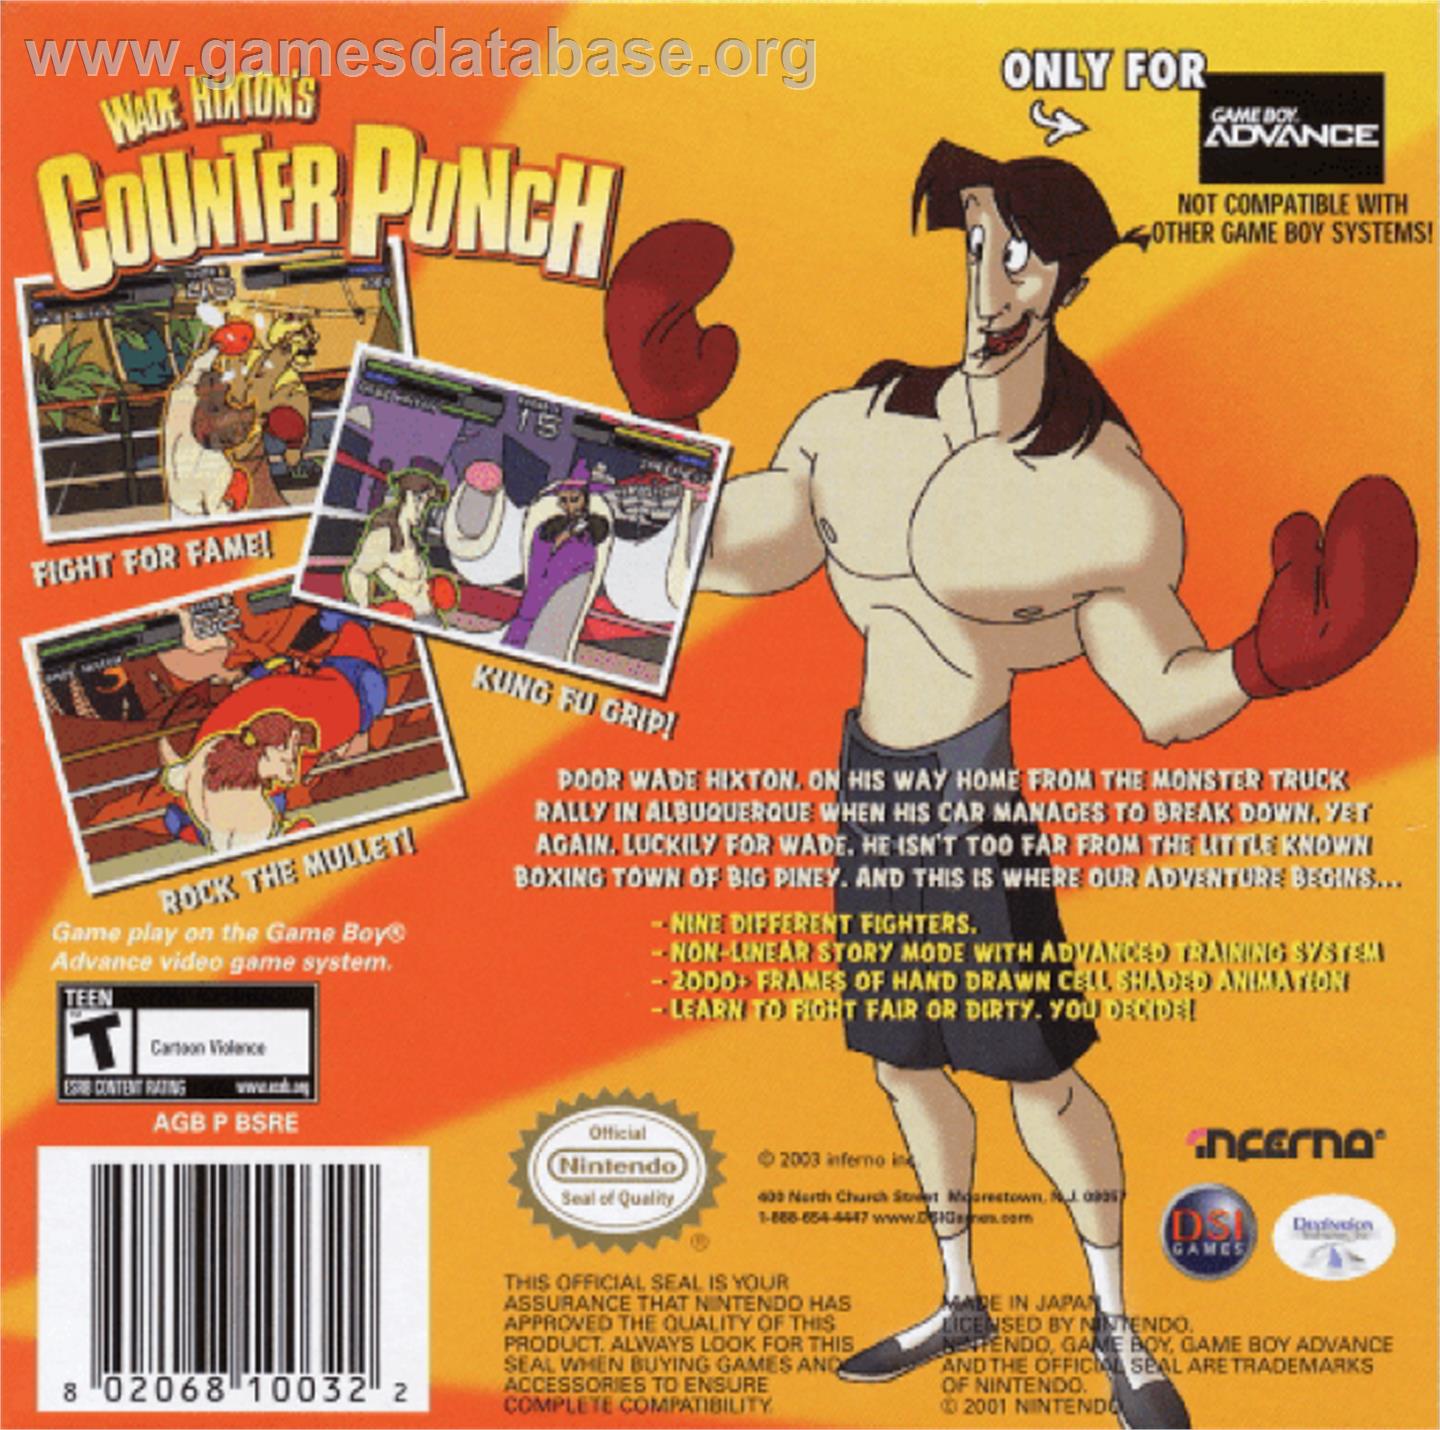 Wade Hixton's Counter Punch - Nintendo Game Boy Advance - Artwork - Box Back